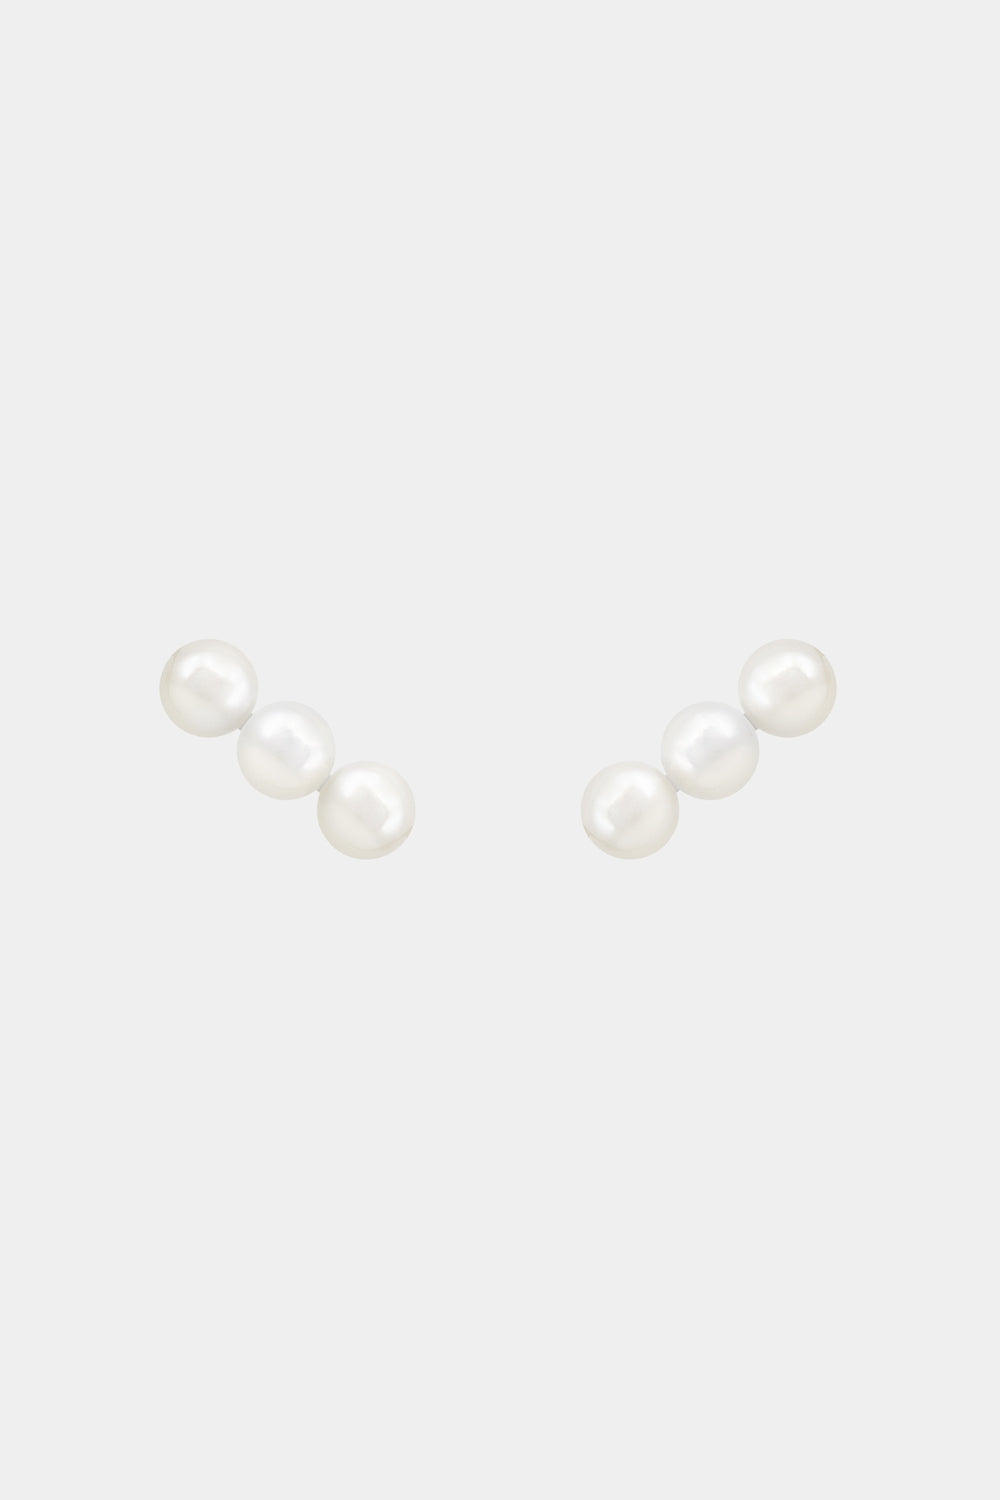 Sarah 3 Pearl Earrings | Silver